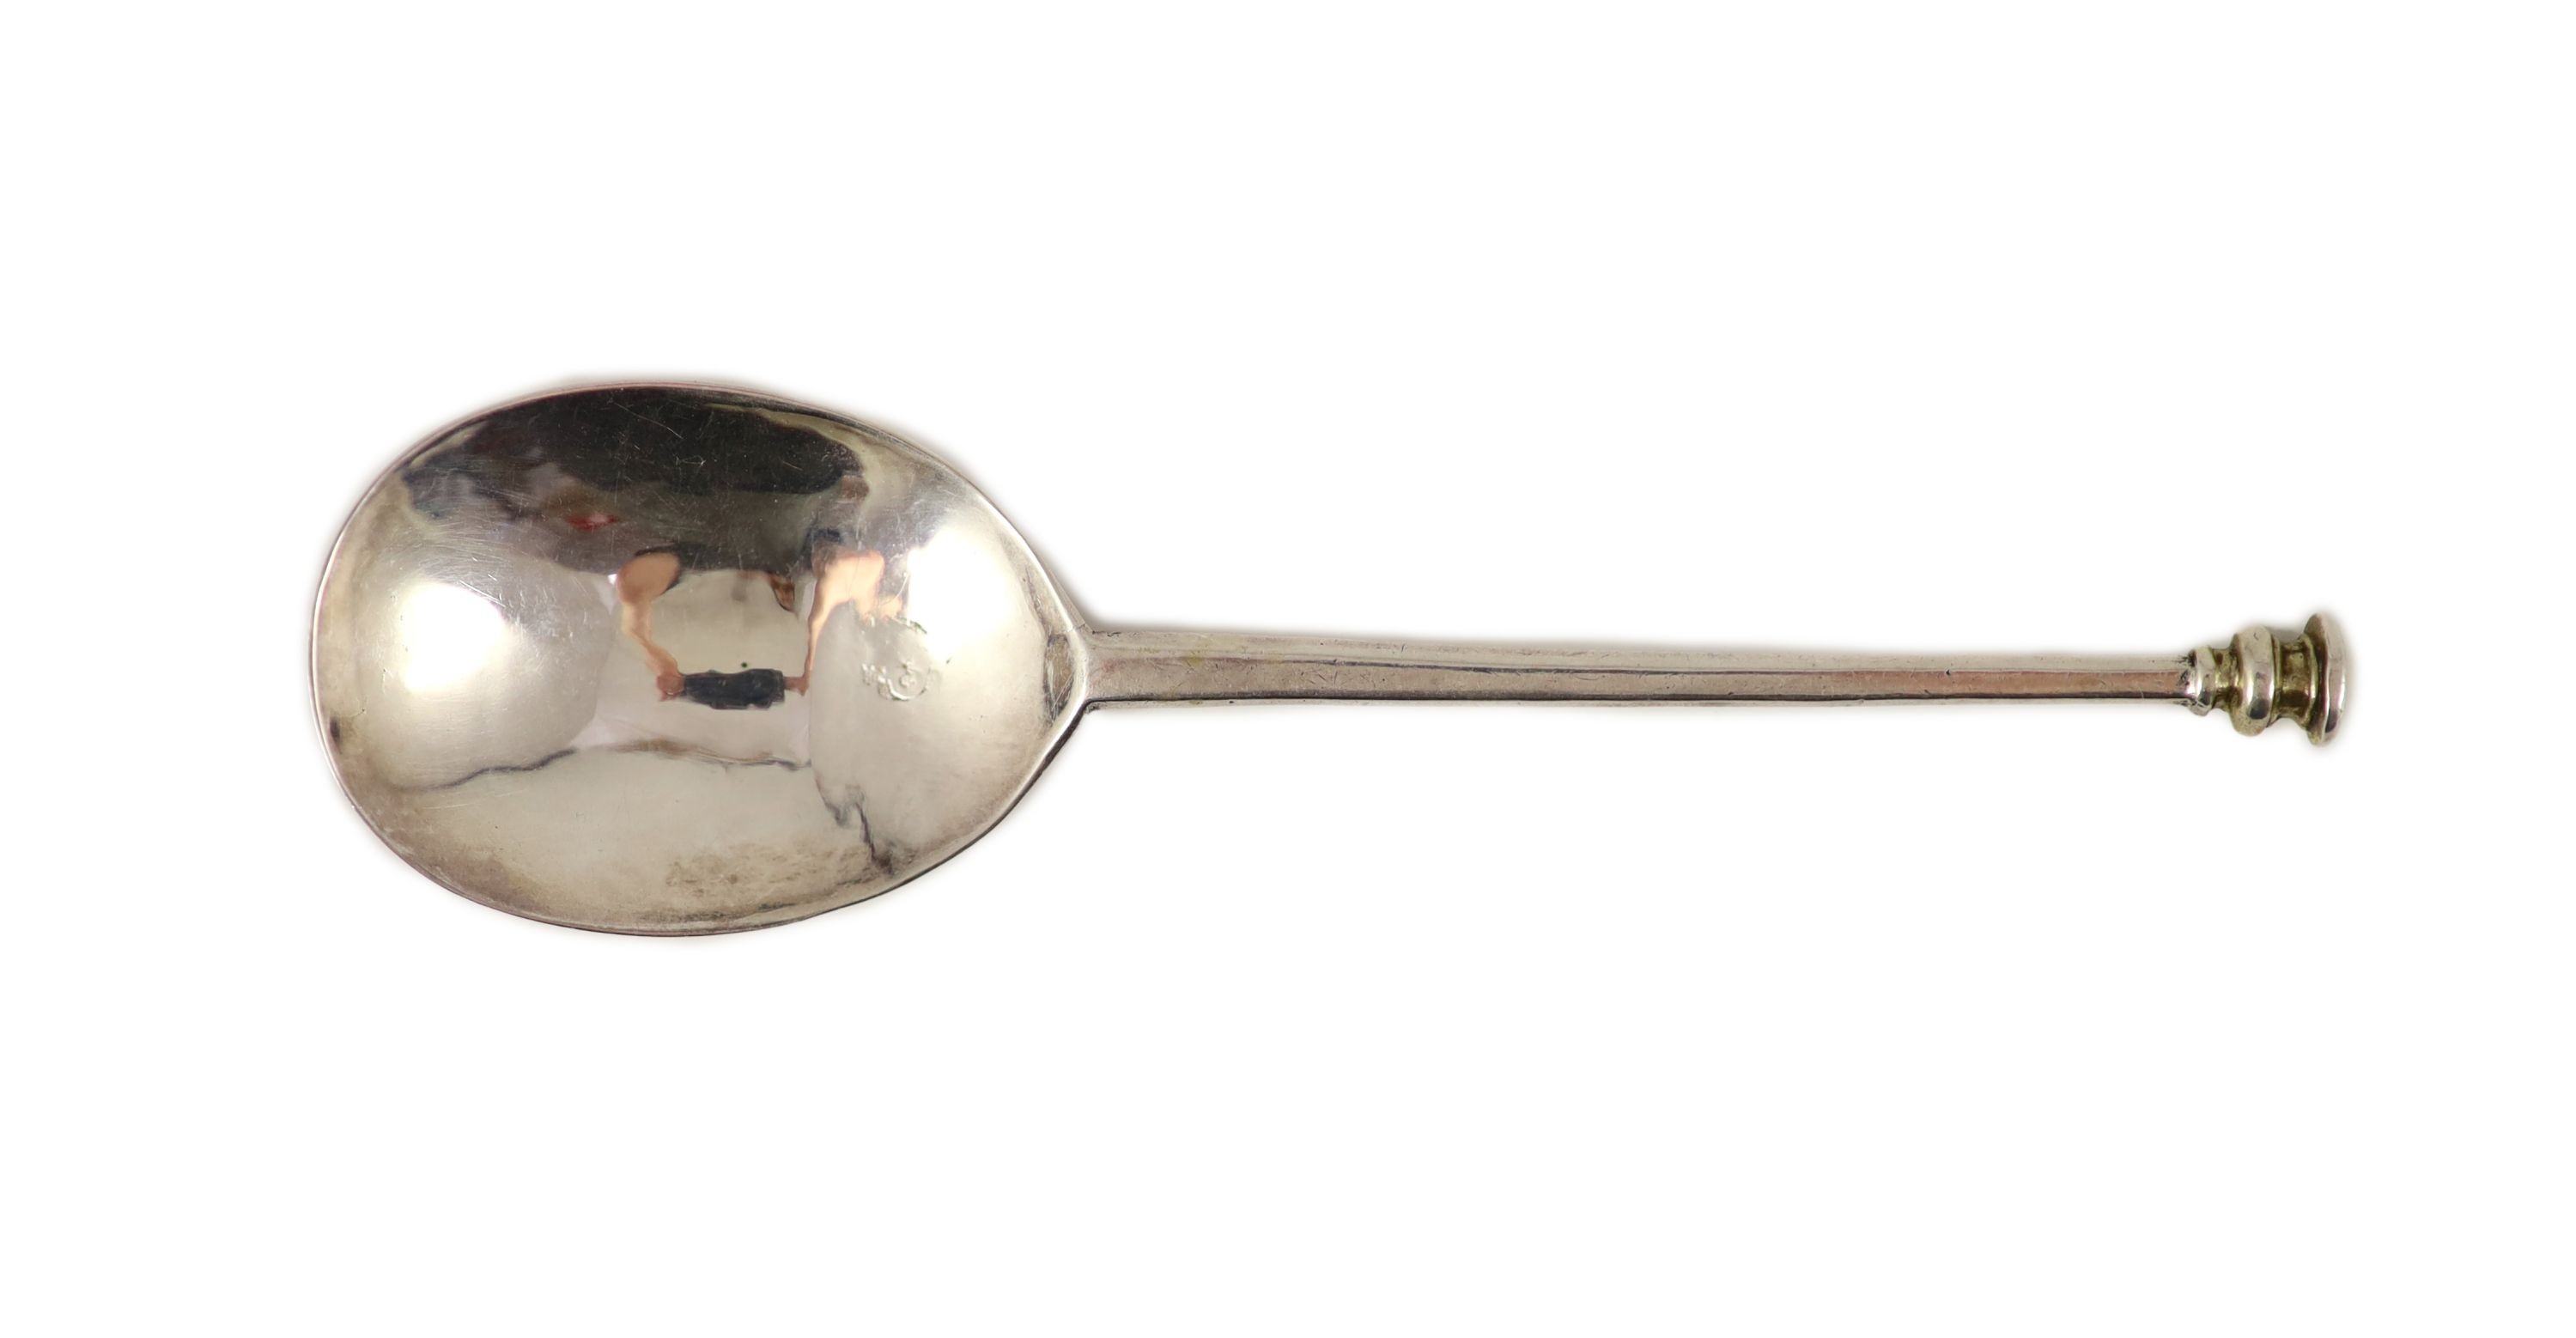 A 17th century silver seal top spoon